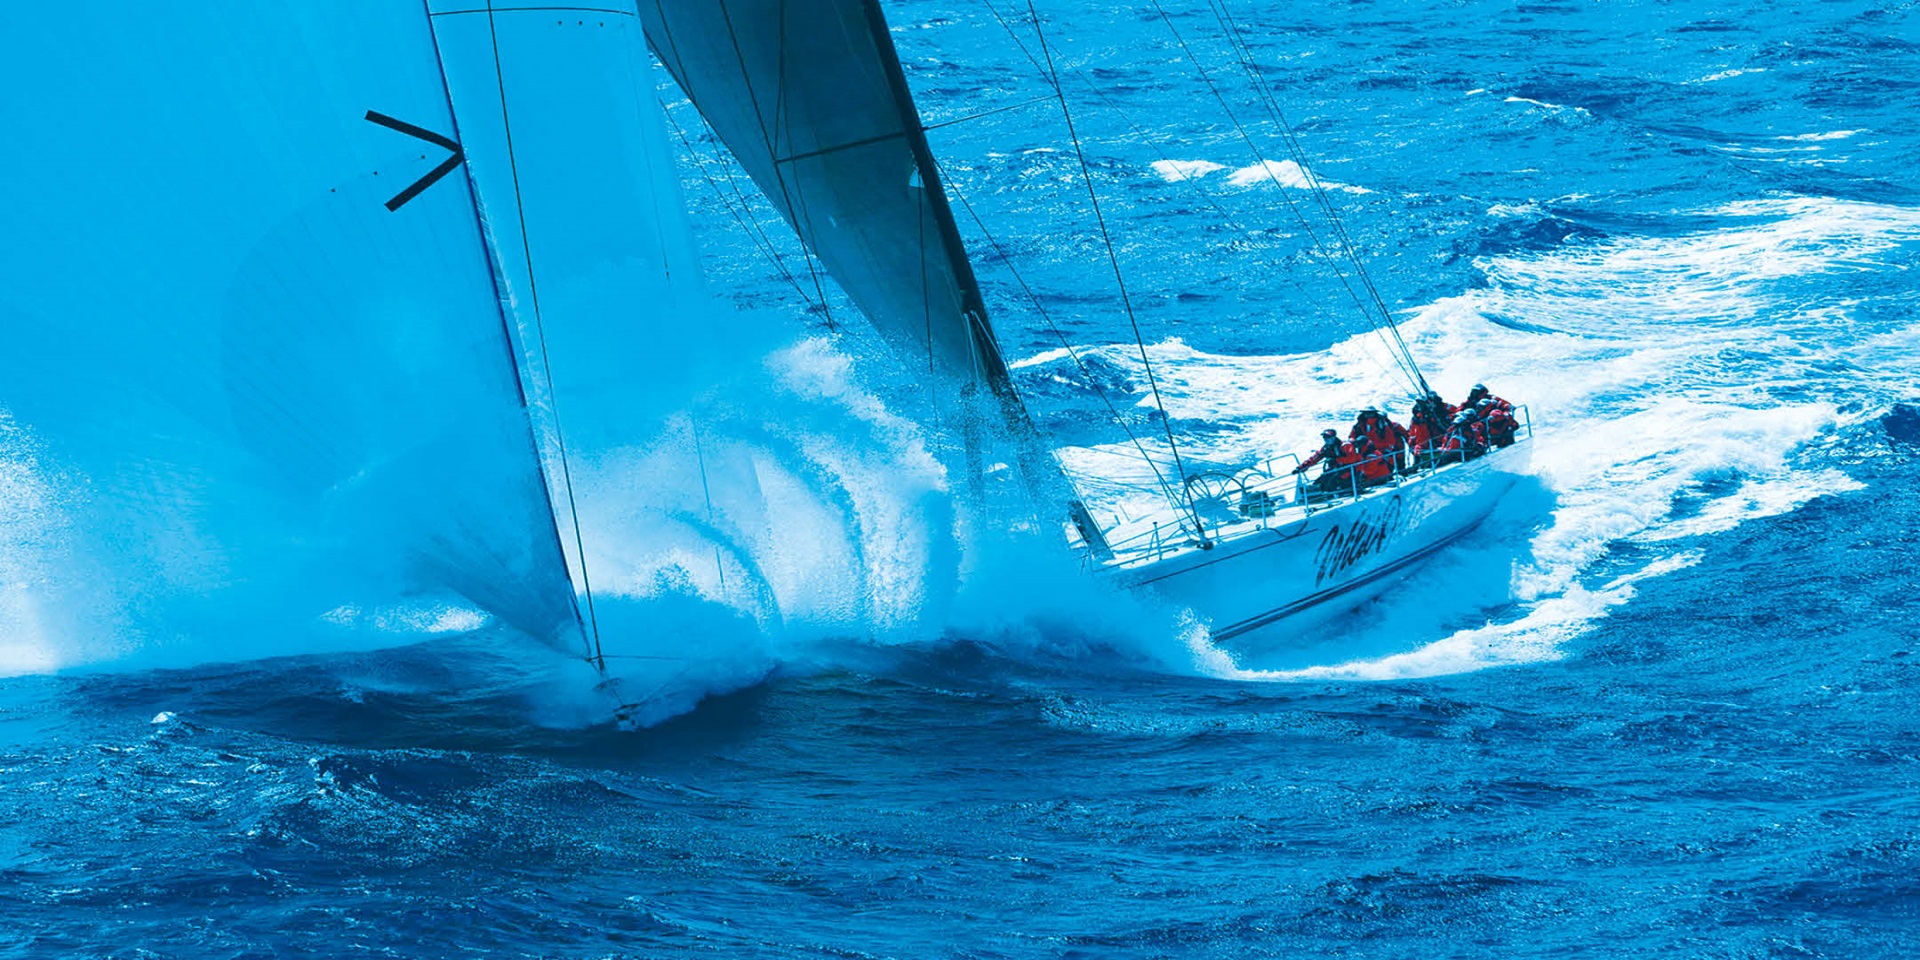 Wild Oats X1 - Sydney-to-Hobart yacht race